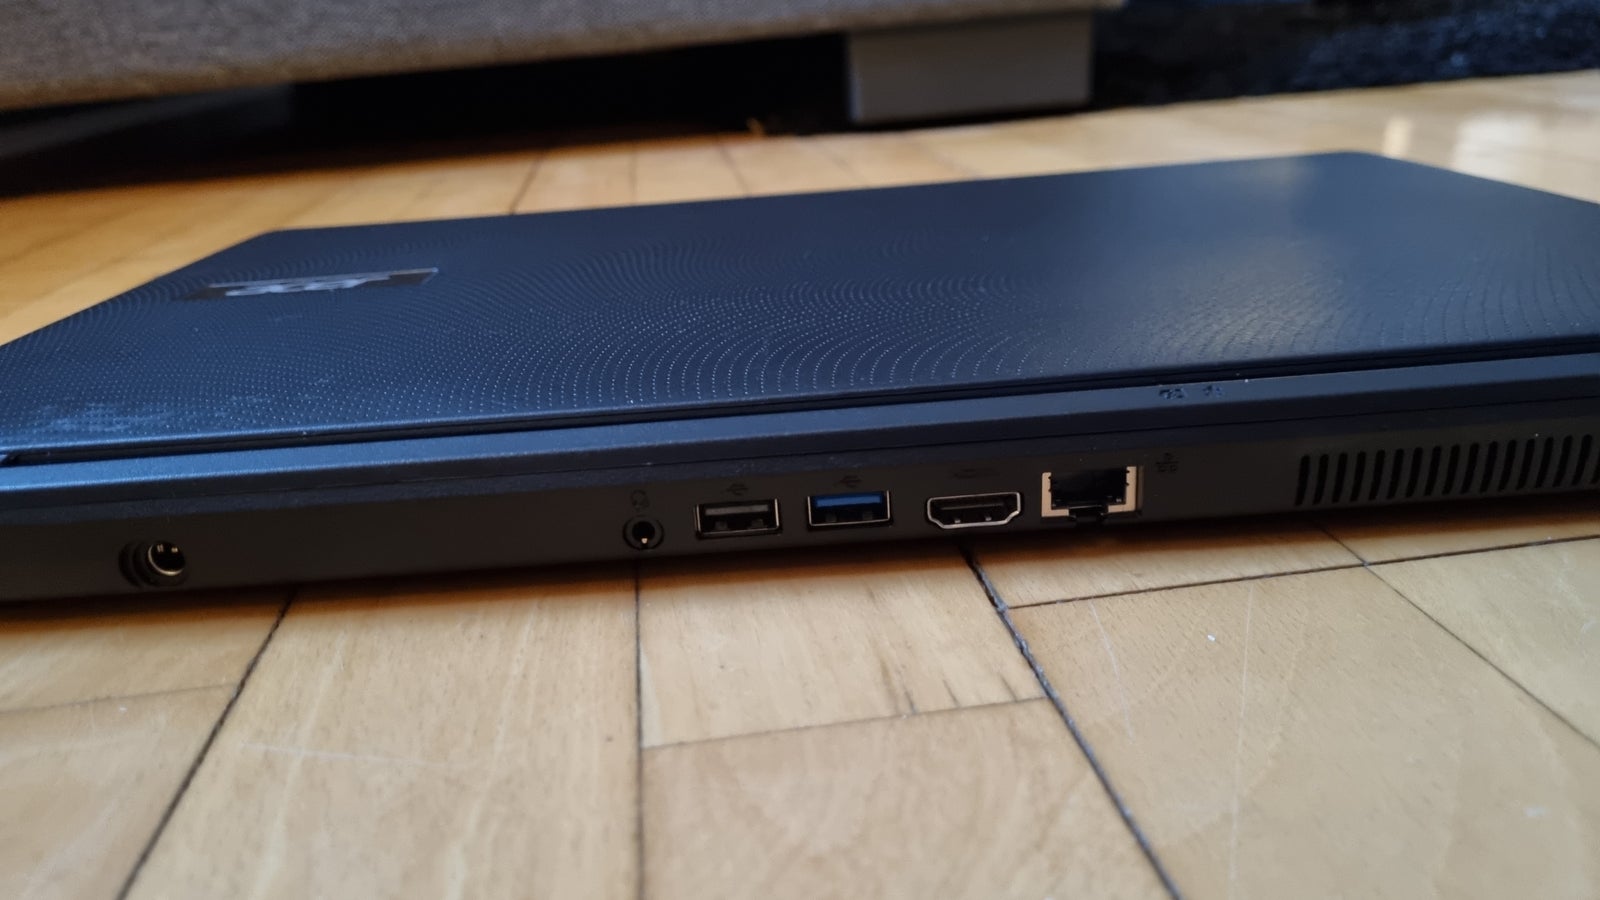 Acer ES1-571-C3YL, 4 GB ram, 128 GB harddisk